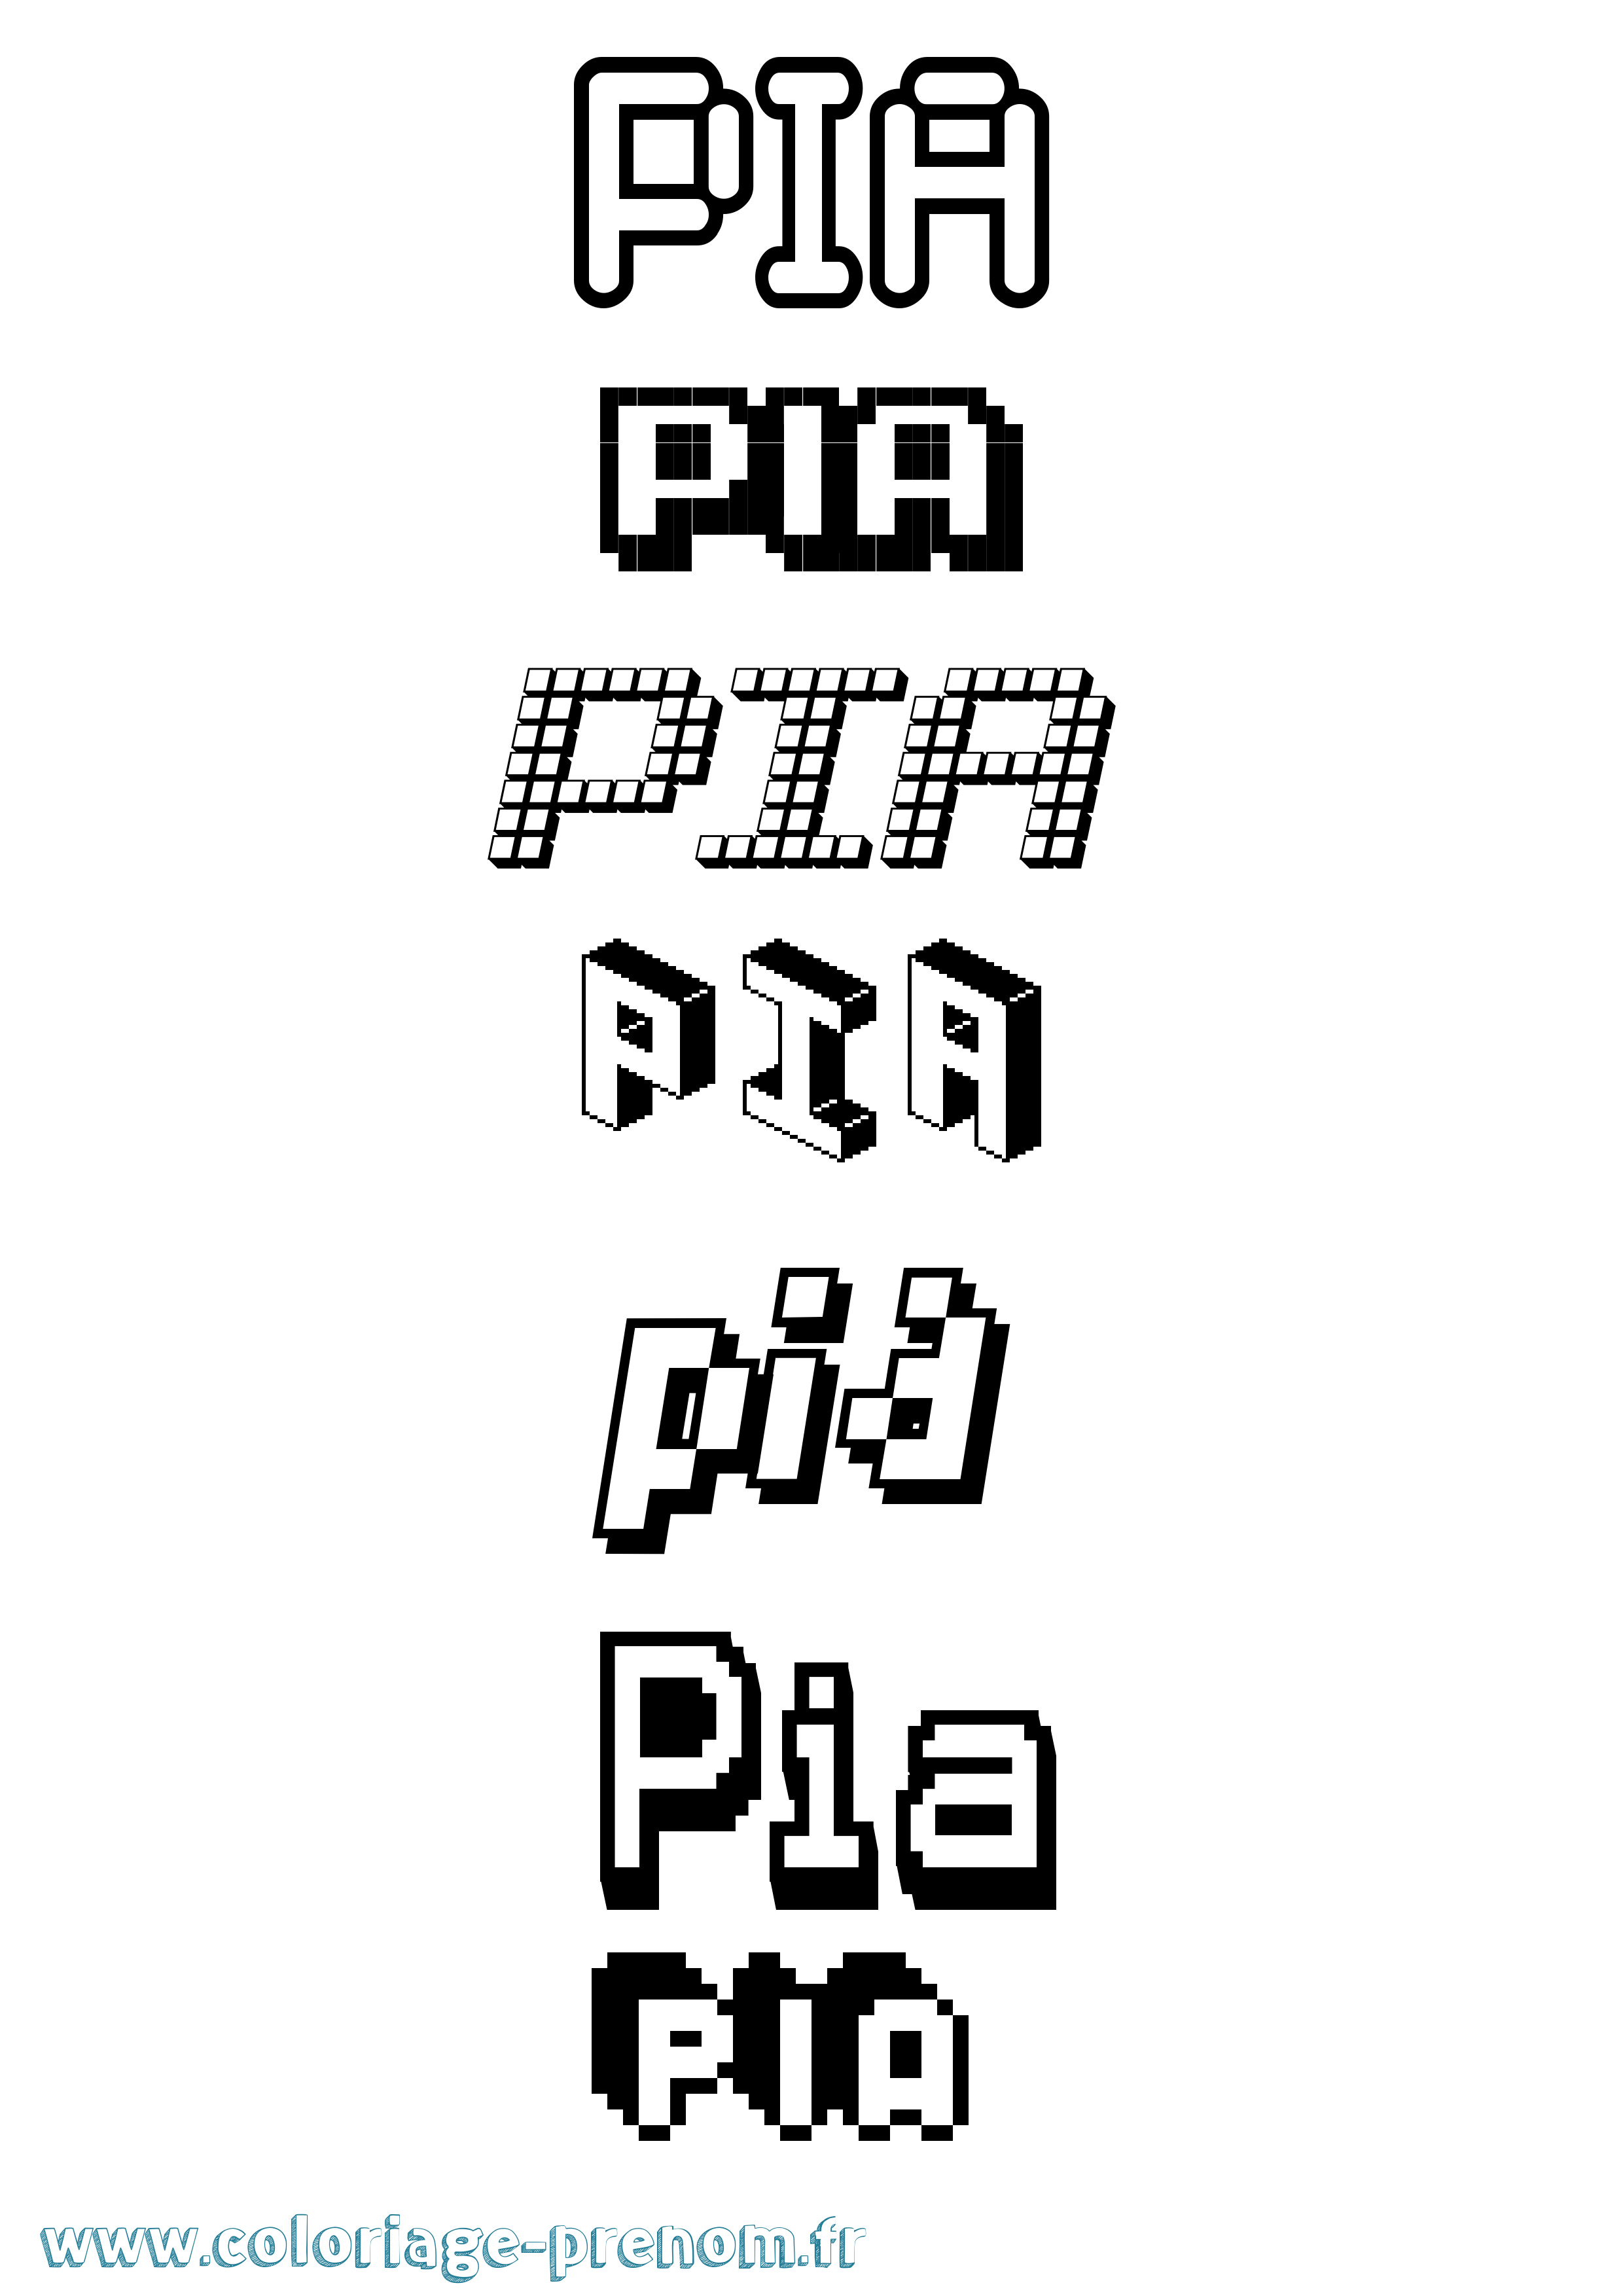 Coloriage prénom Pia Pixel